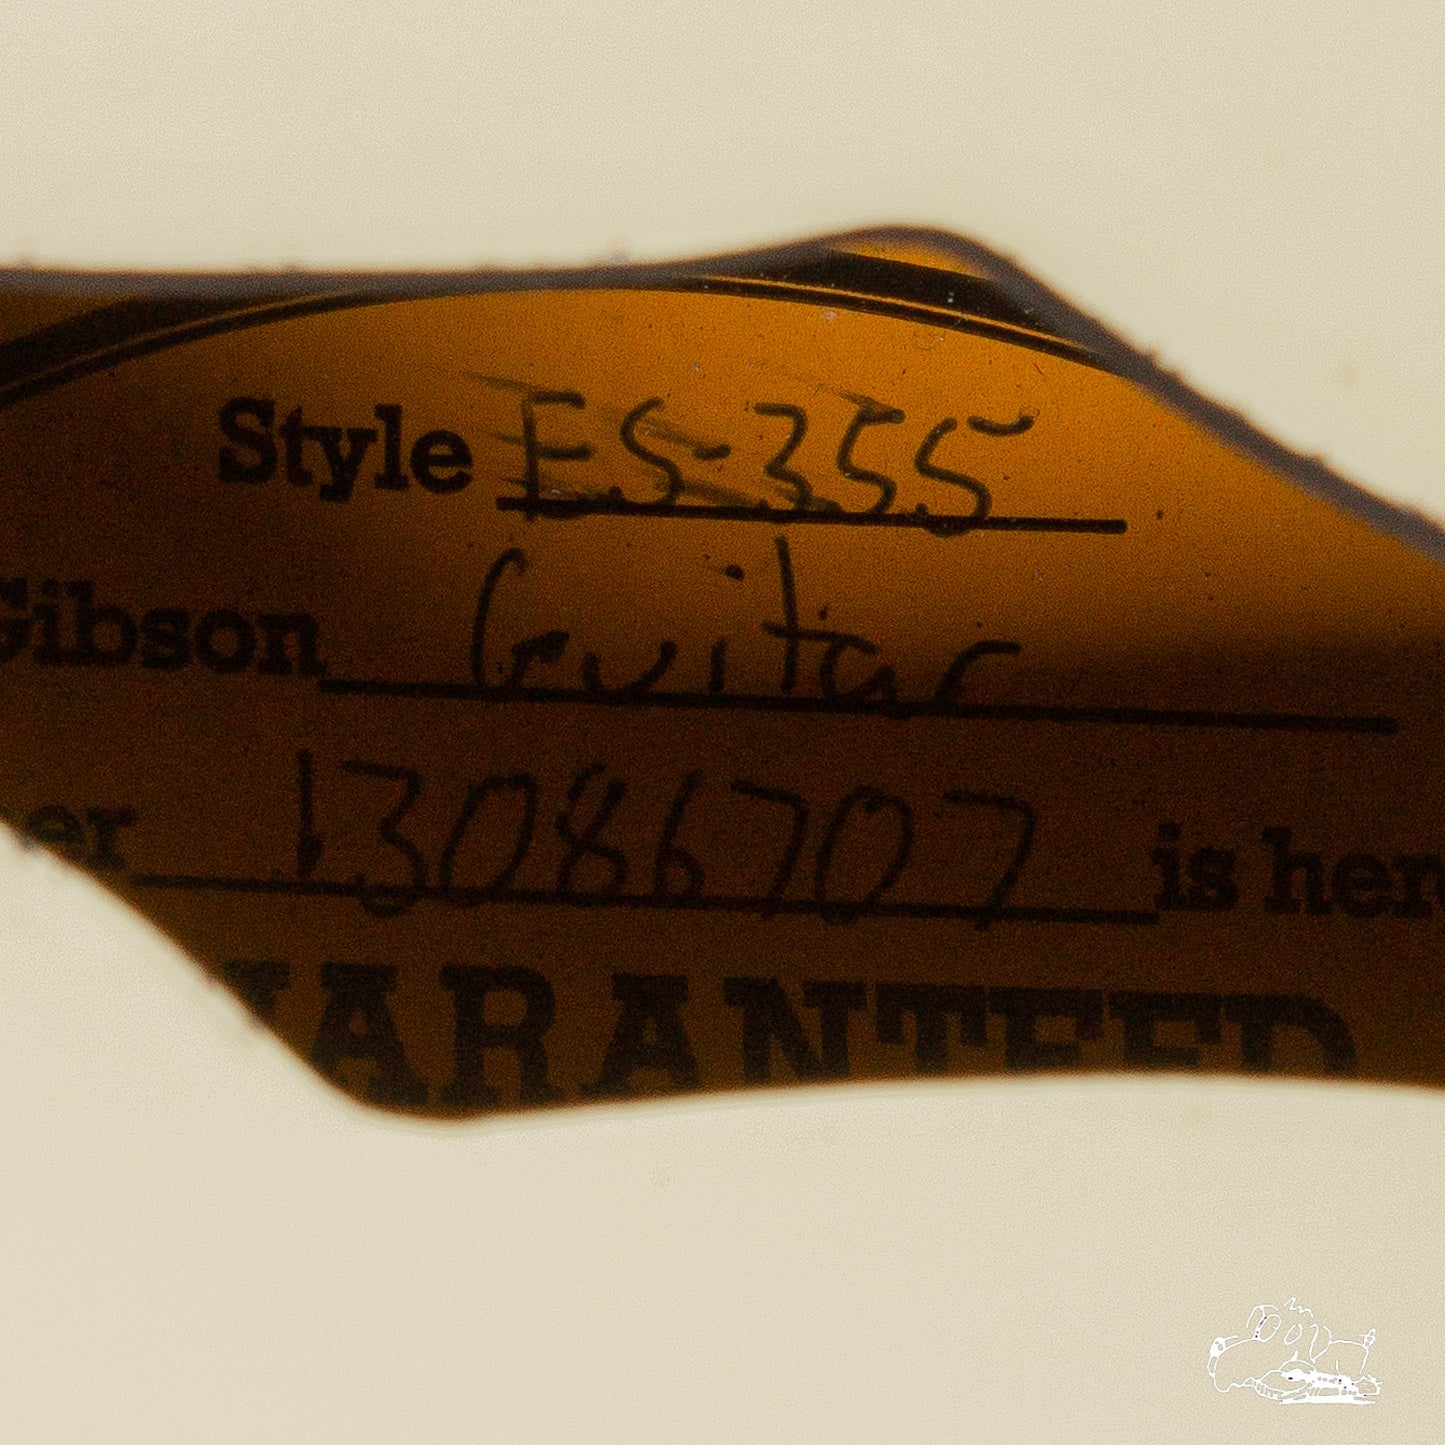 2016 Gibson Custom Shop VOS ES-355